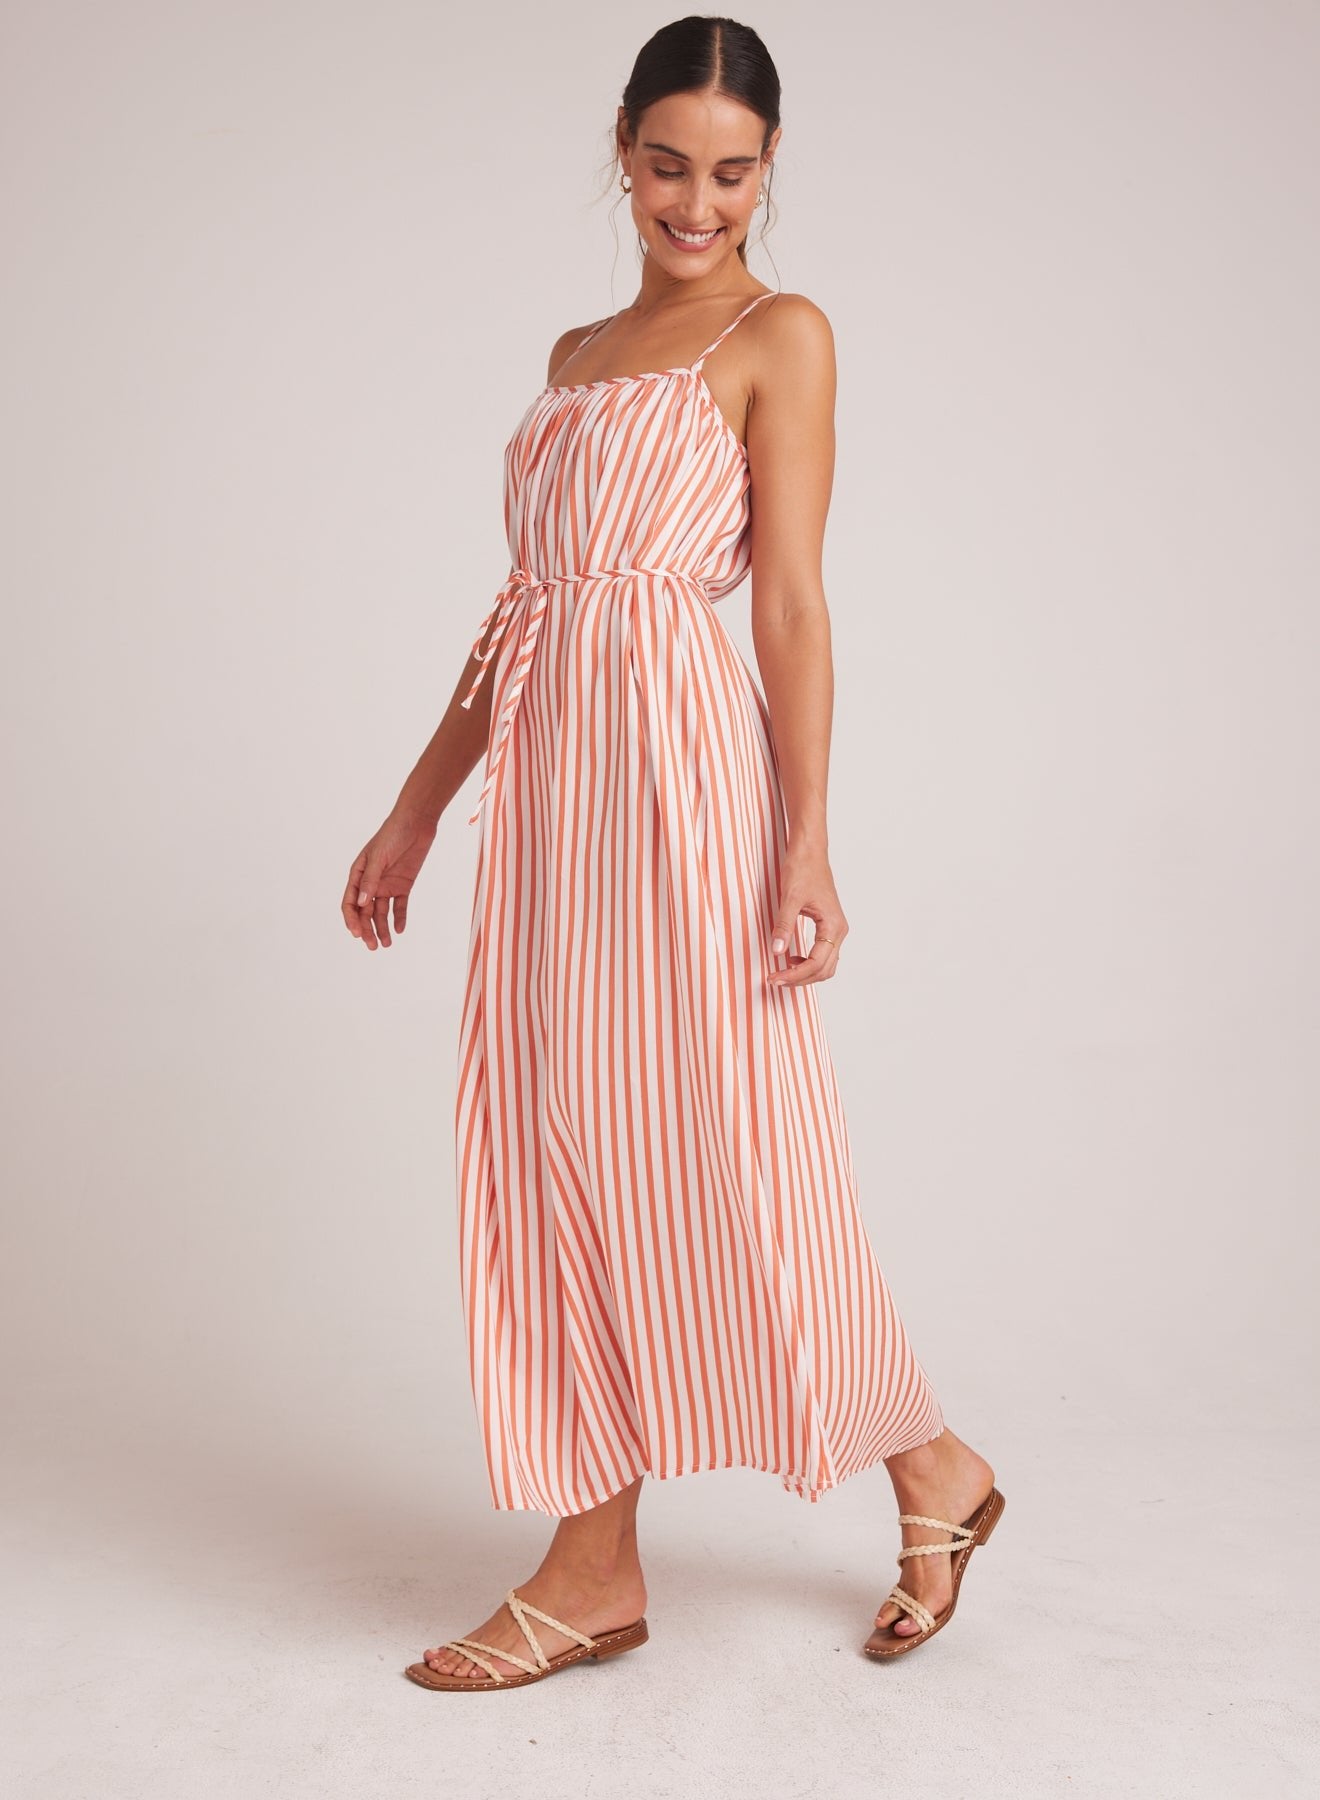 Bella DahlShirred Cami Maxi Dress - Sunset Blaze StripeDresses